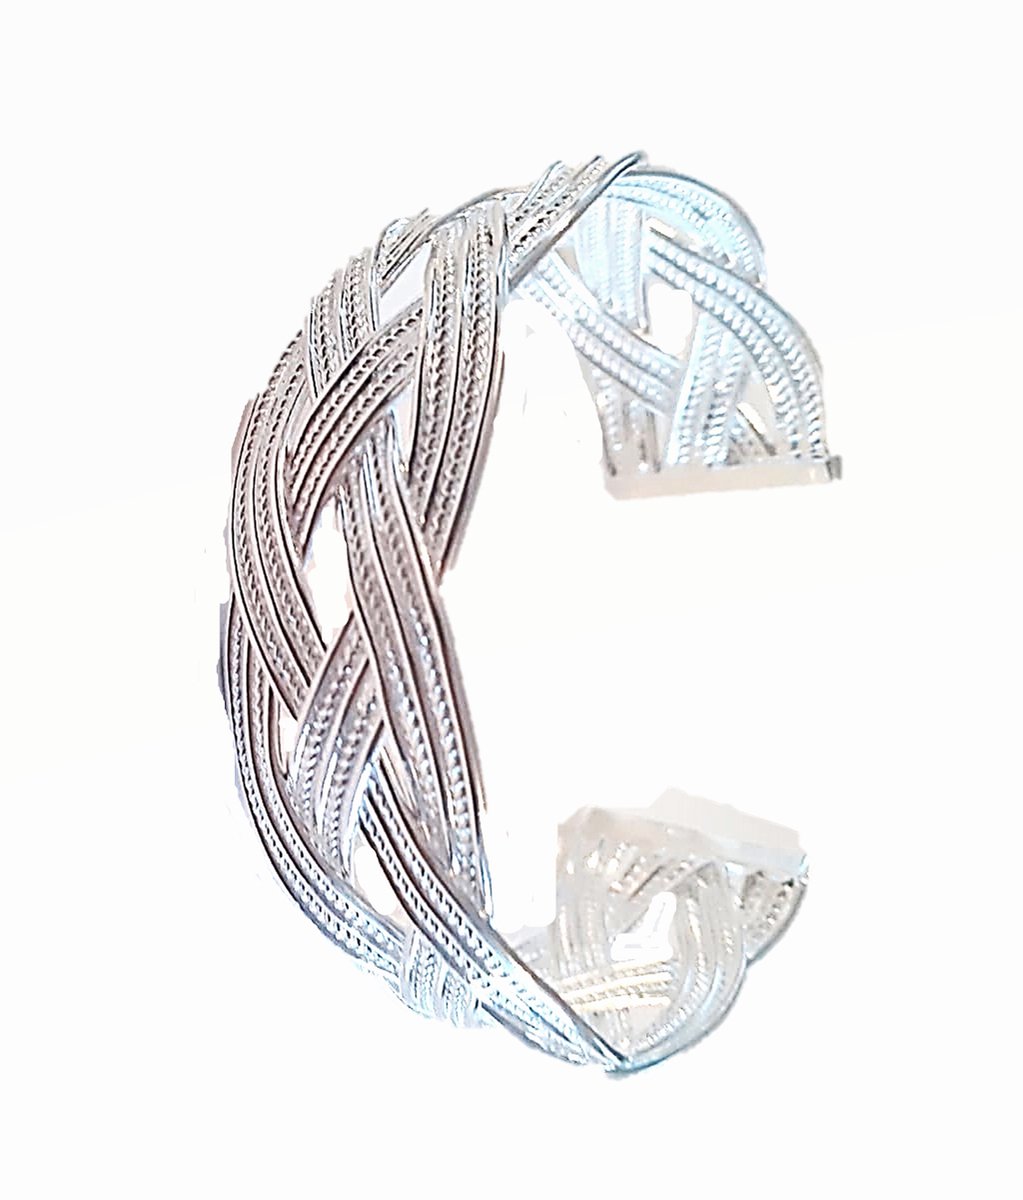 Chainlook silver bangle 21812 - kettingontwerp zilver 925 armband 21812 - one size - Cadeautip